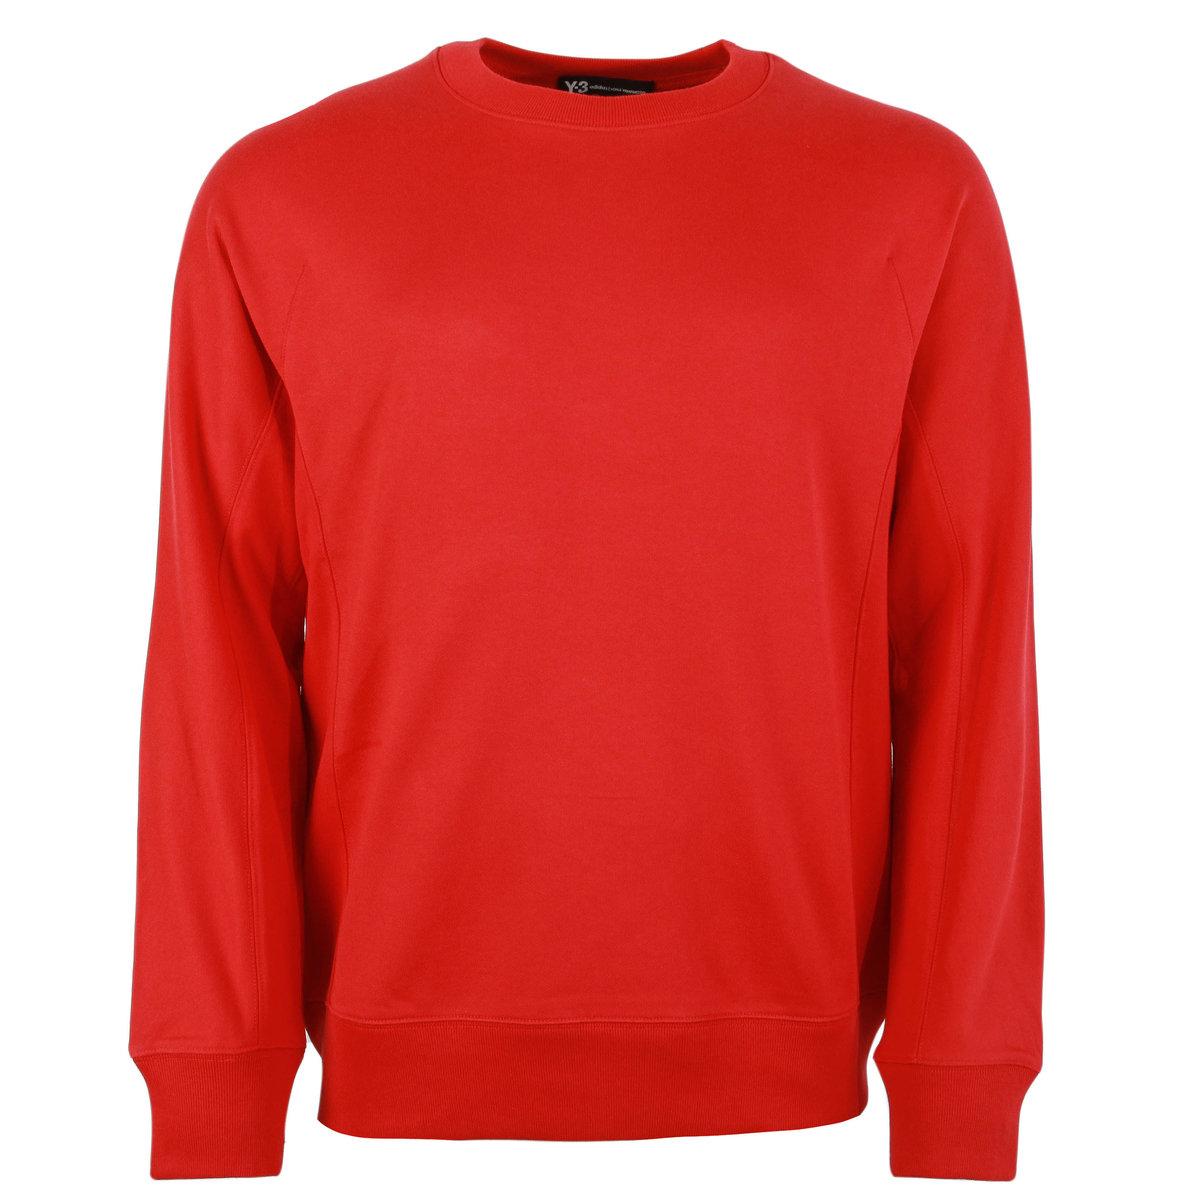 Y-3 Cotton Classic Crewneck Sweatshirt in Red - Lyst